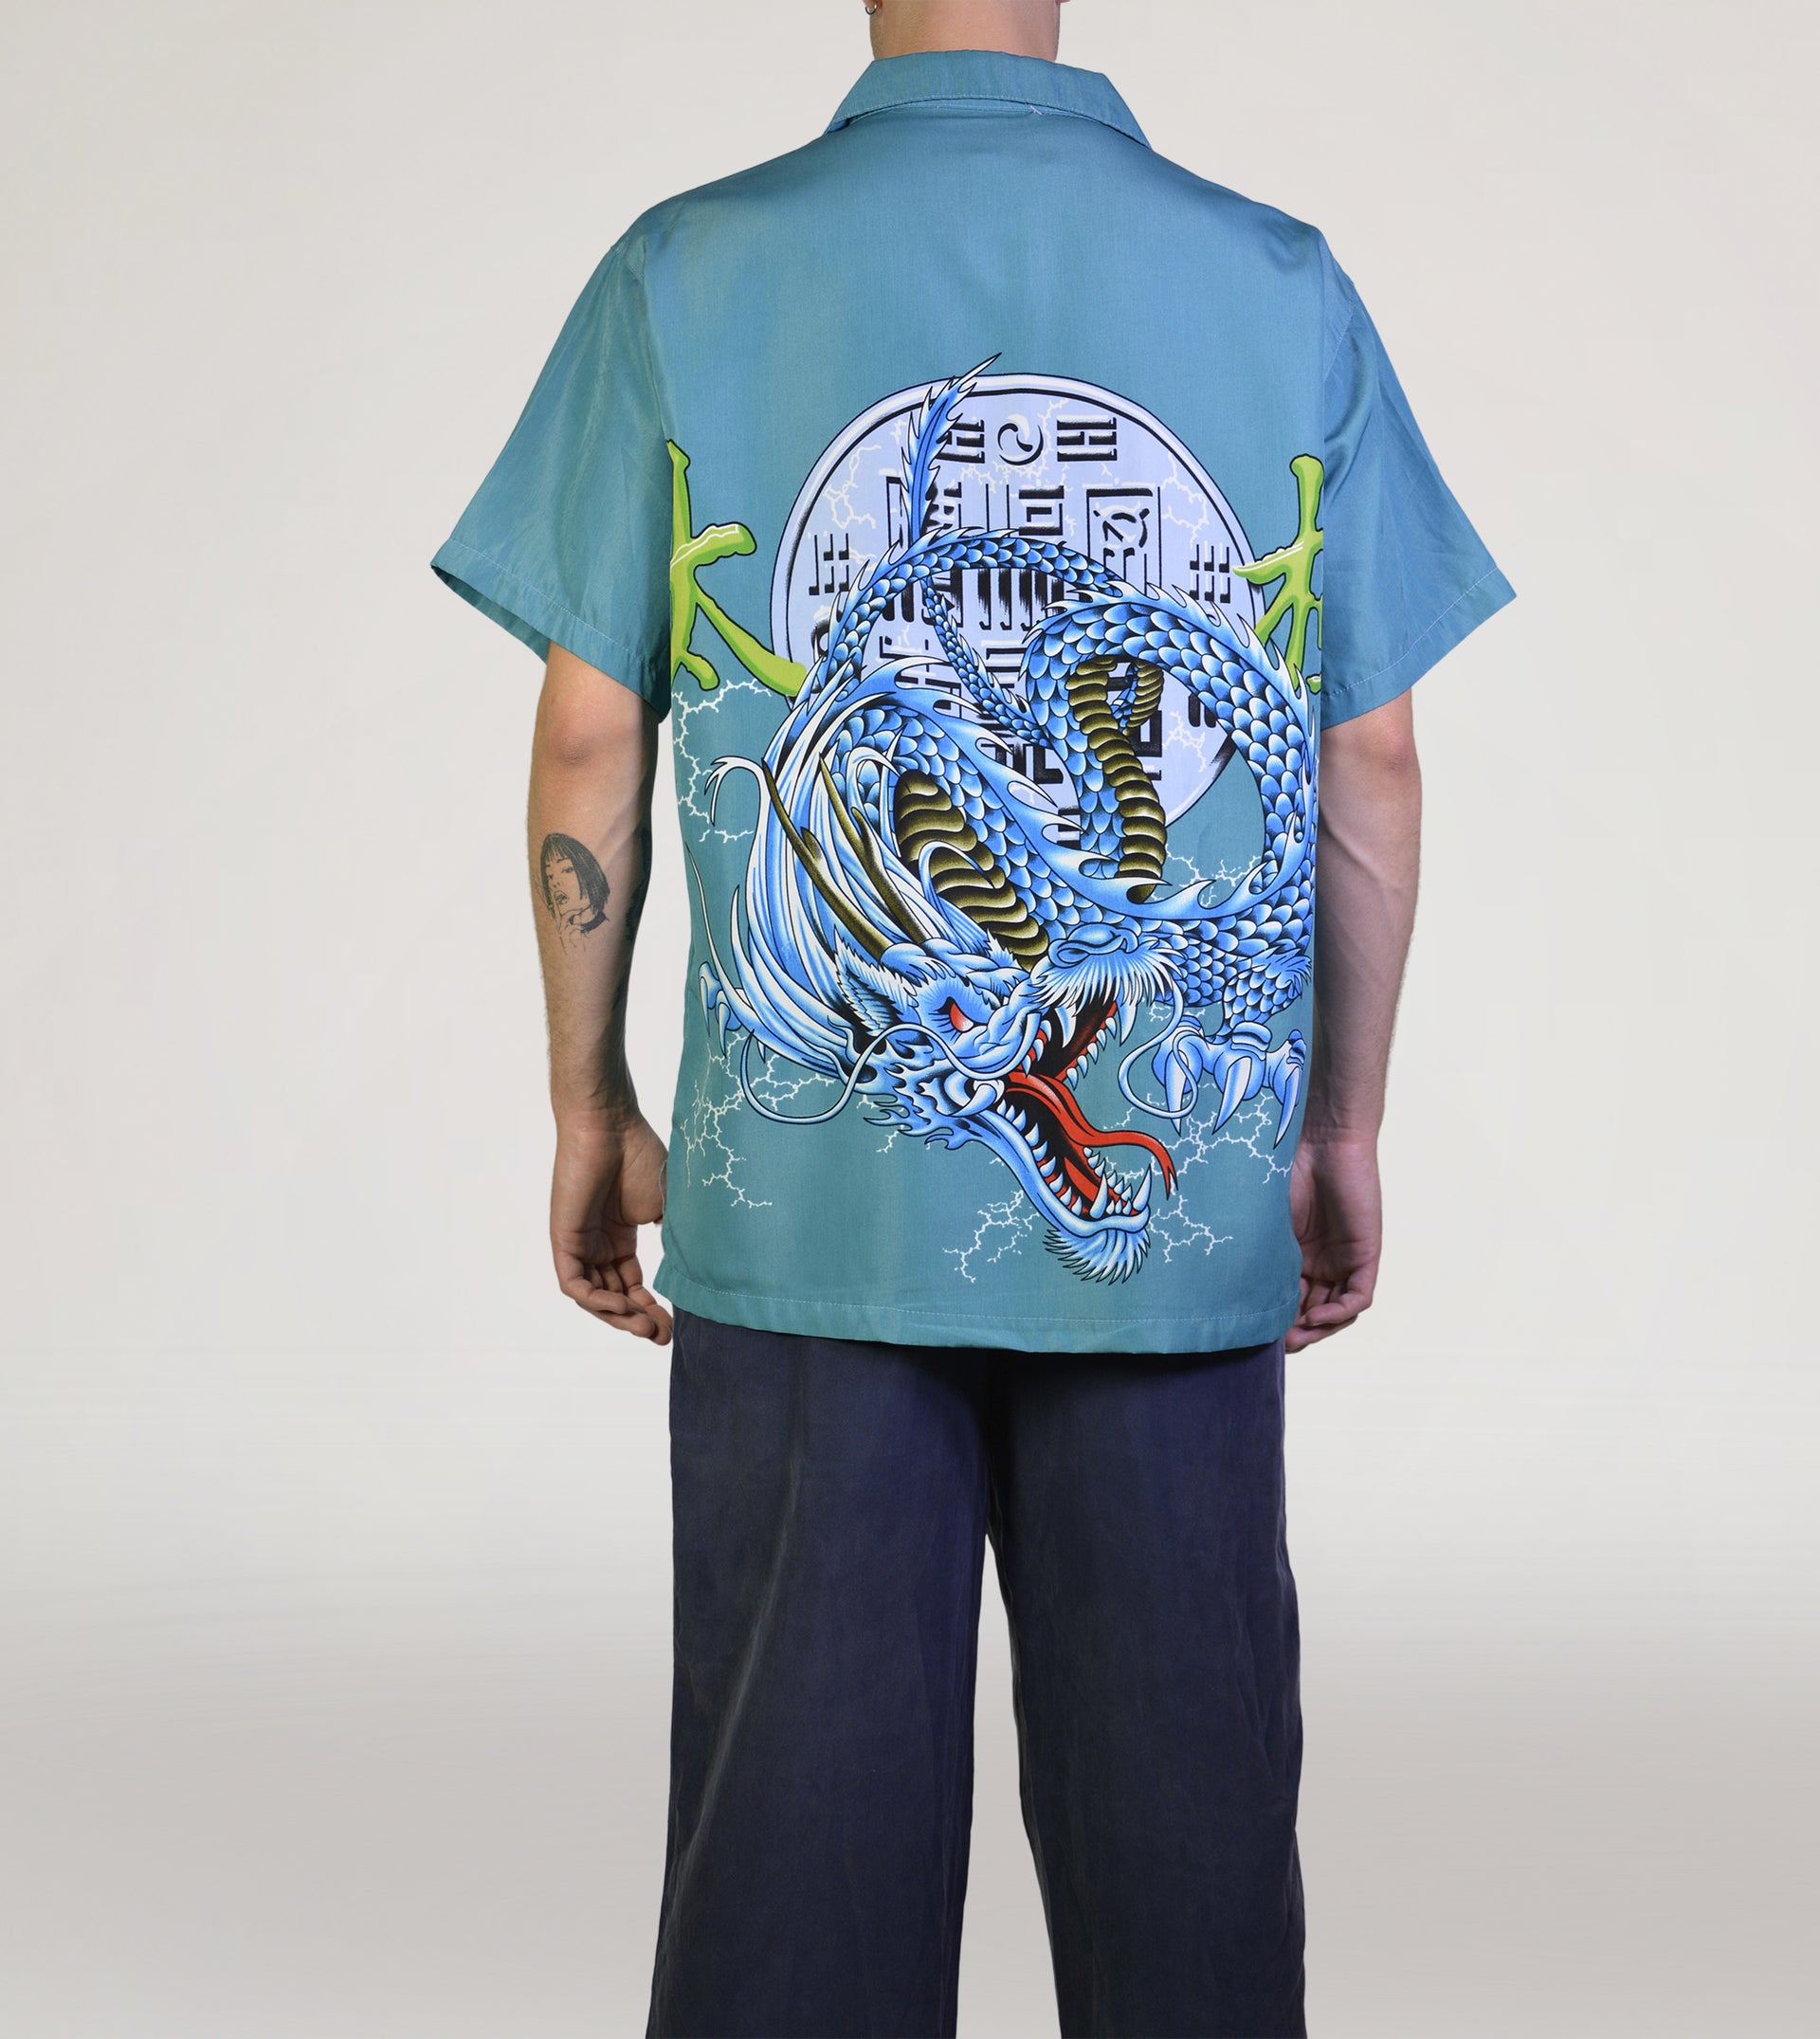 00s dragon shirt - PICKNWEIGHT - VINTAGE KILO STORE